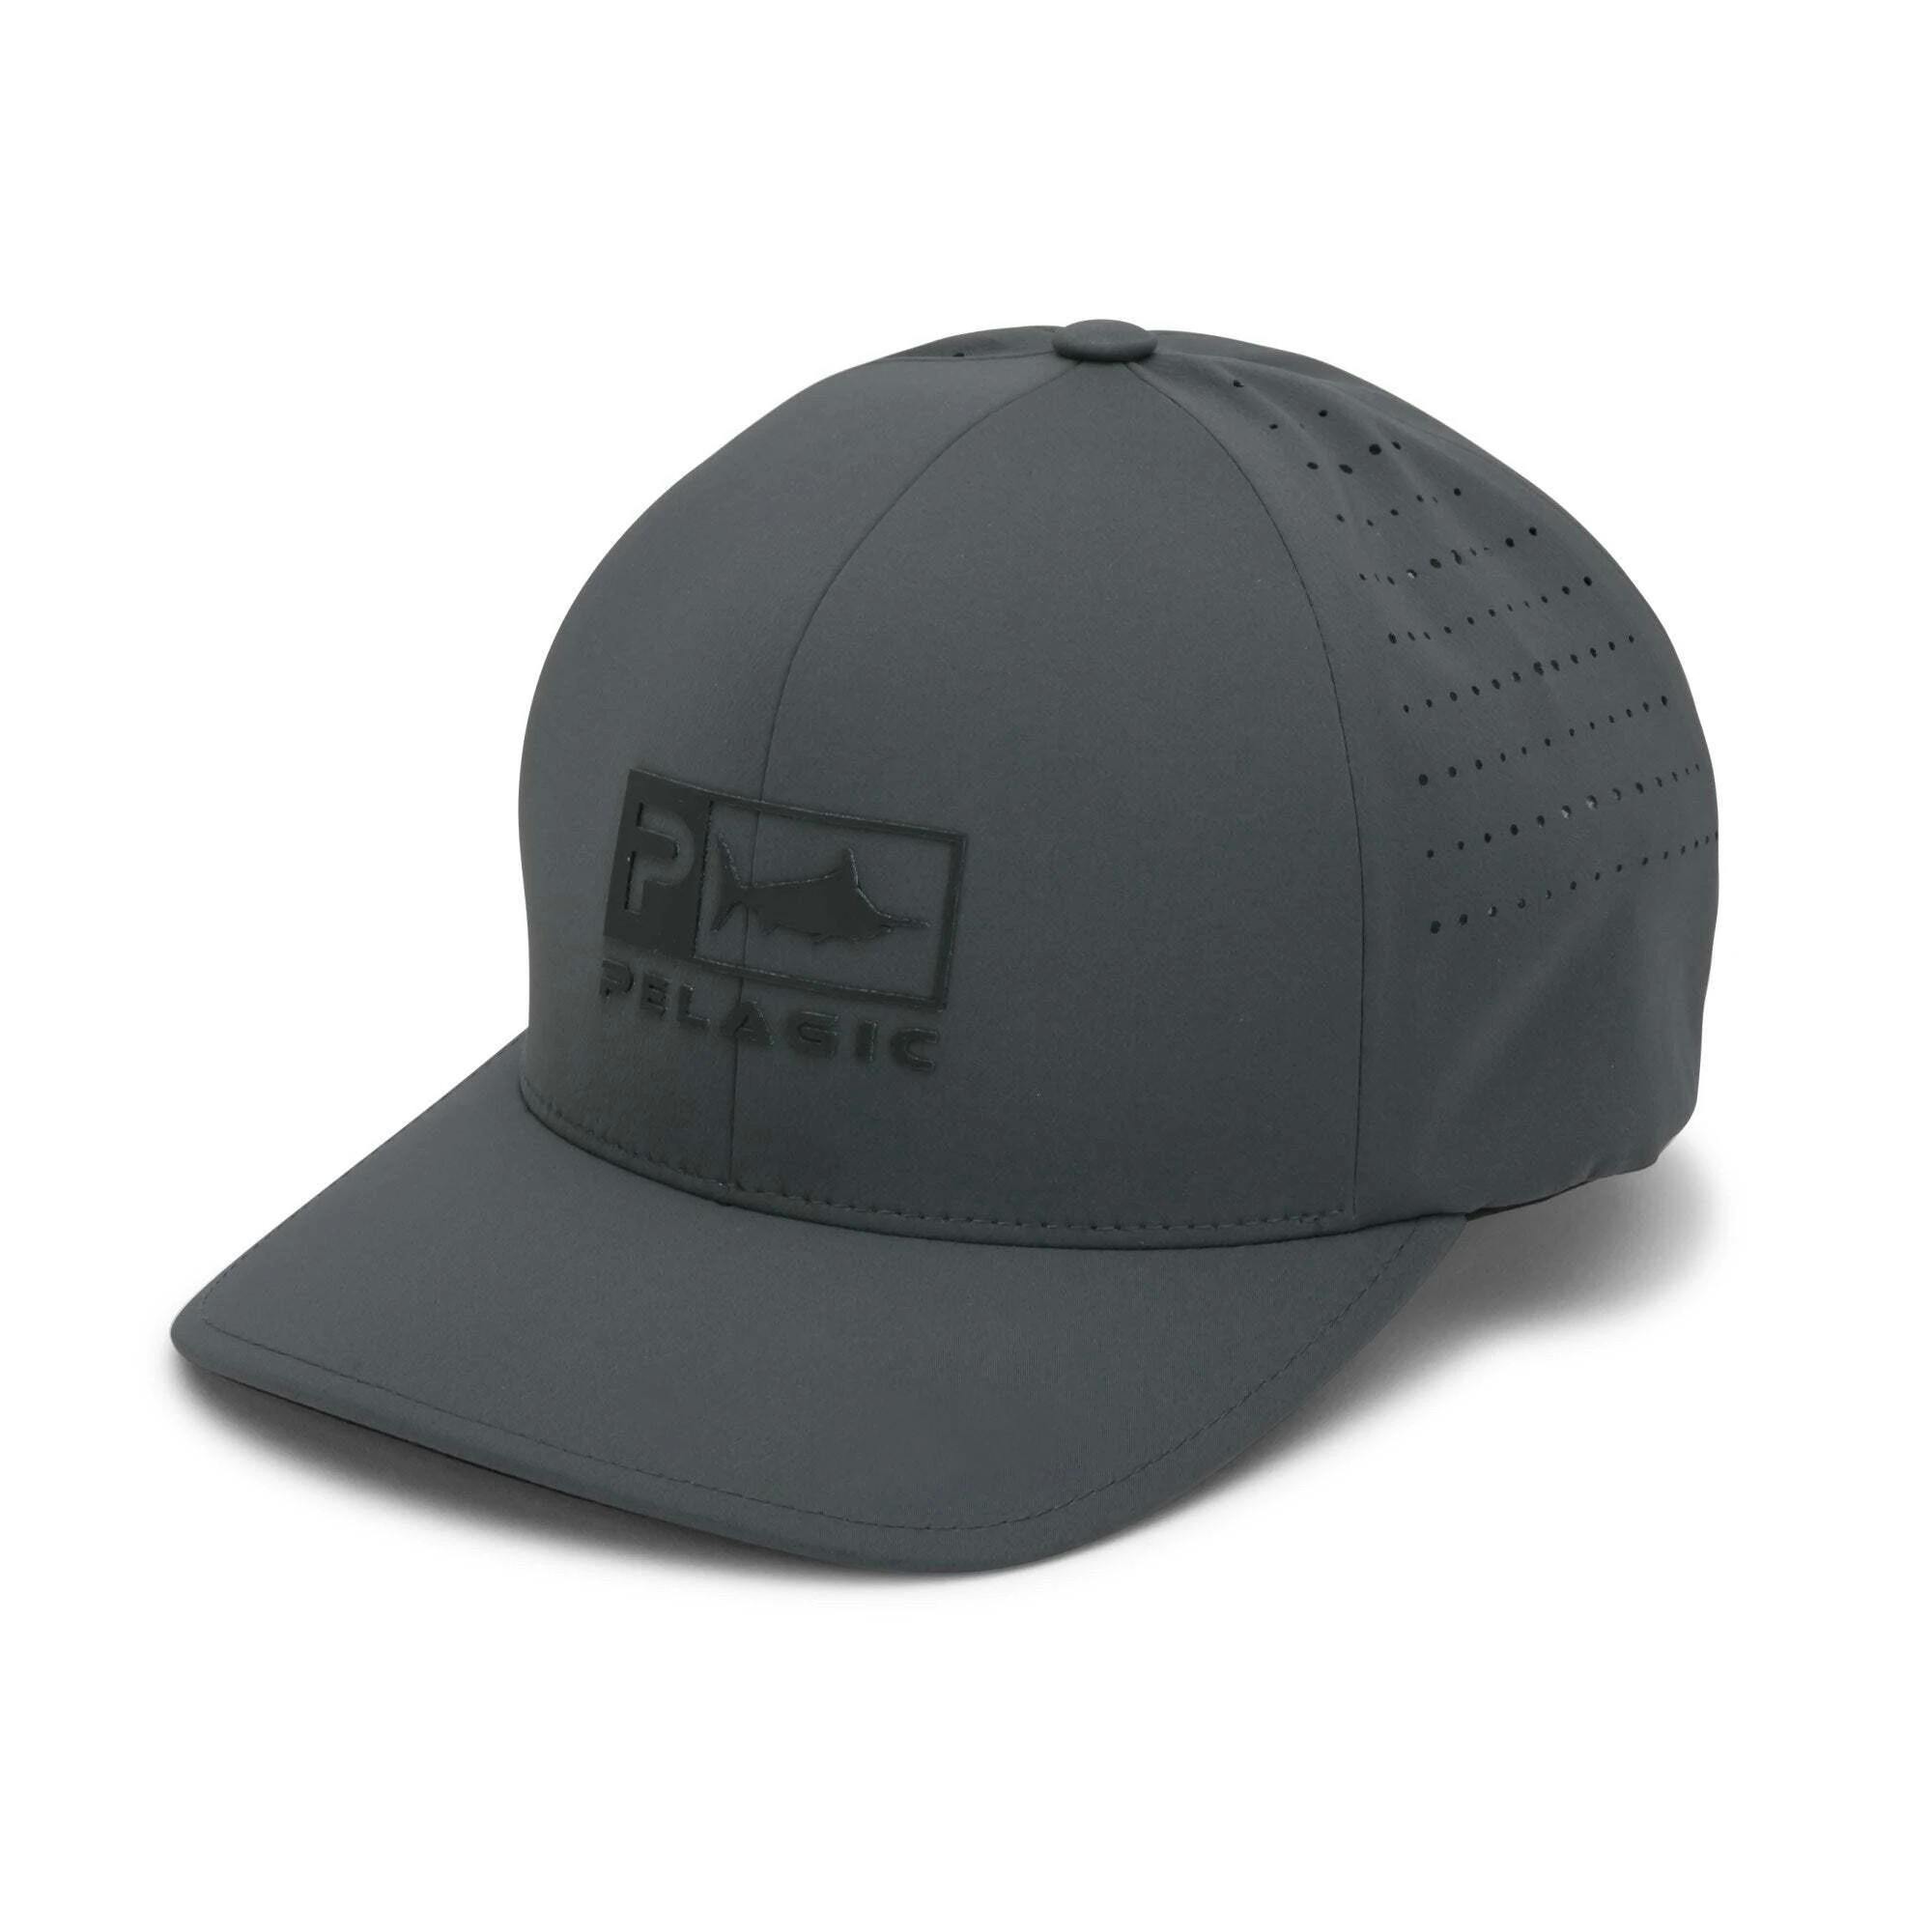 Pelagic Flexfit Delta Icon Fishing Hat Angle - Gray